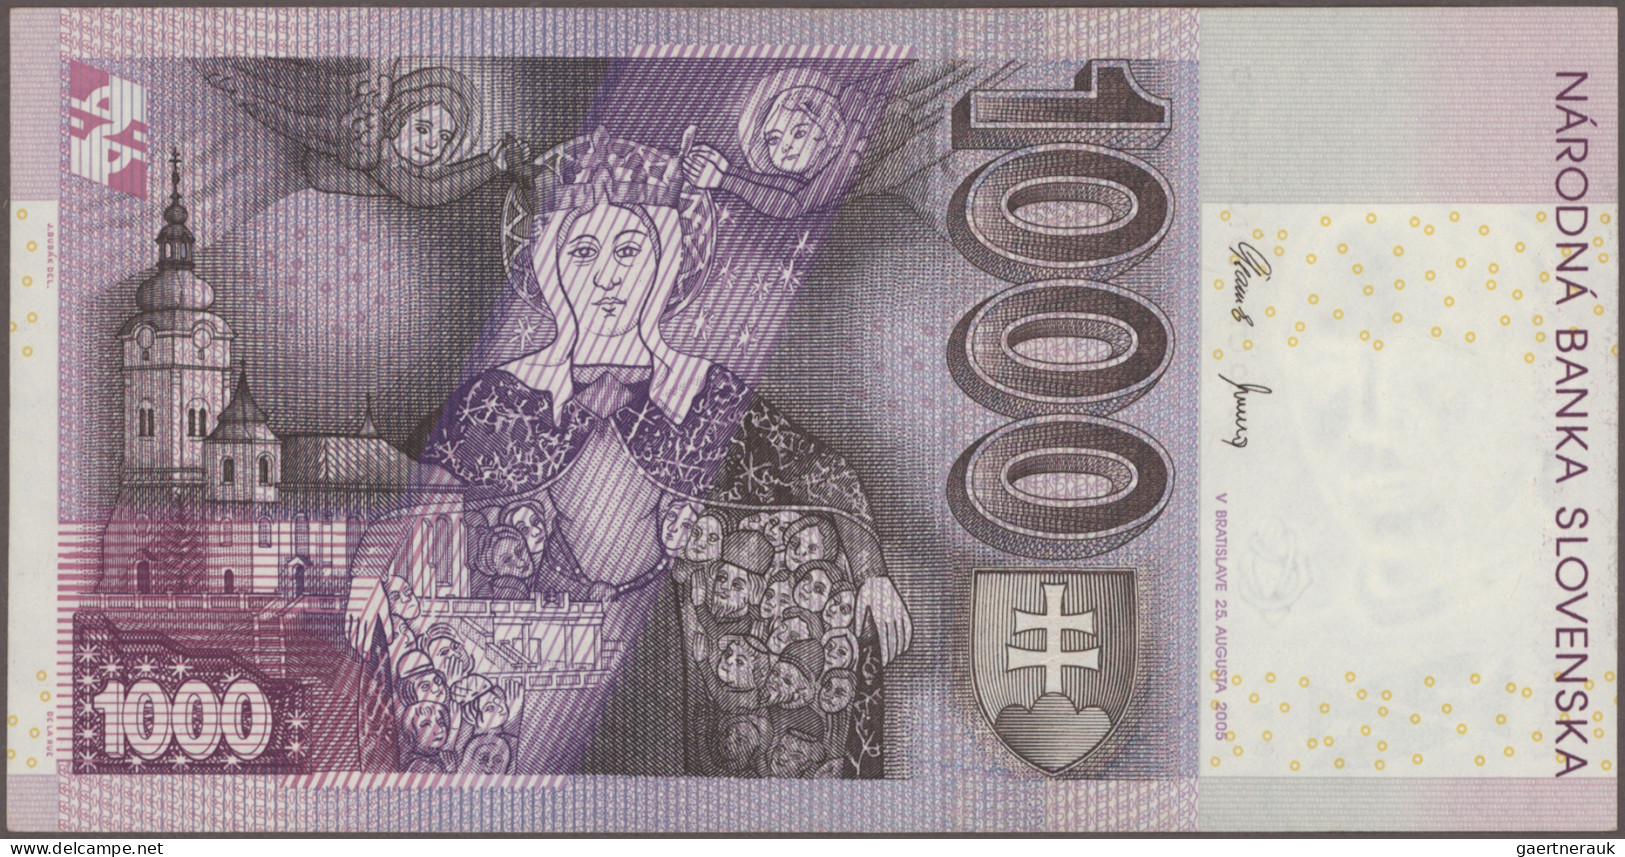 Slovakia: Slovakia Republic And Slovakia National Bank, Lot With 10 Banknotes, S - Eslovaquia